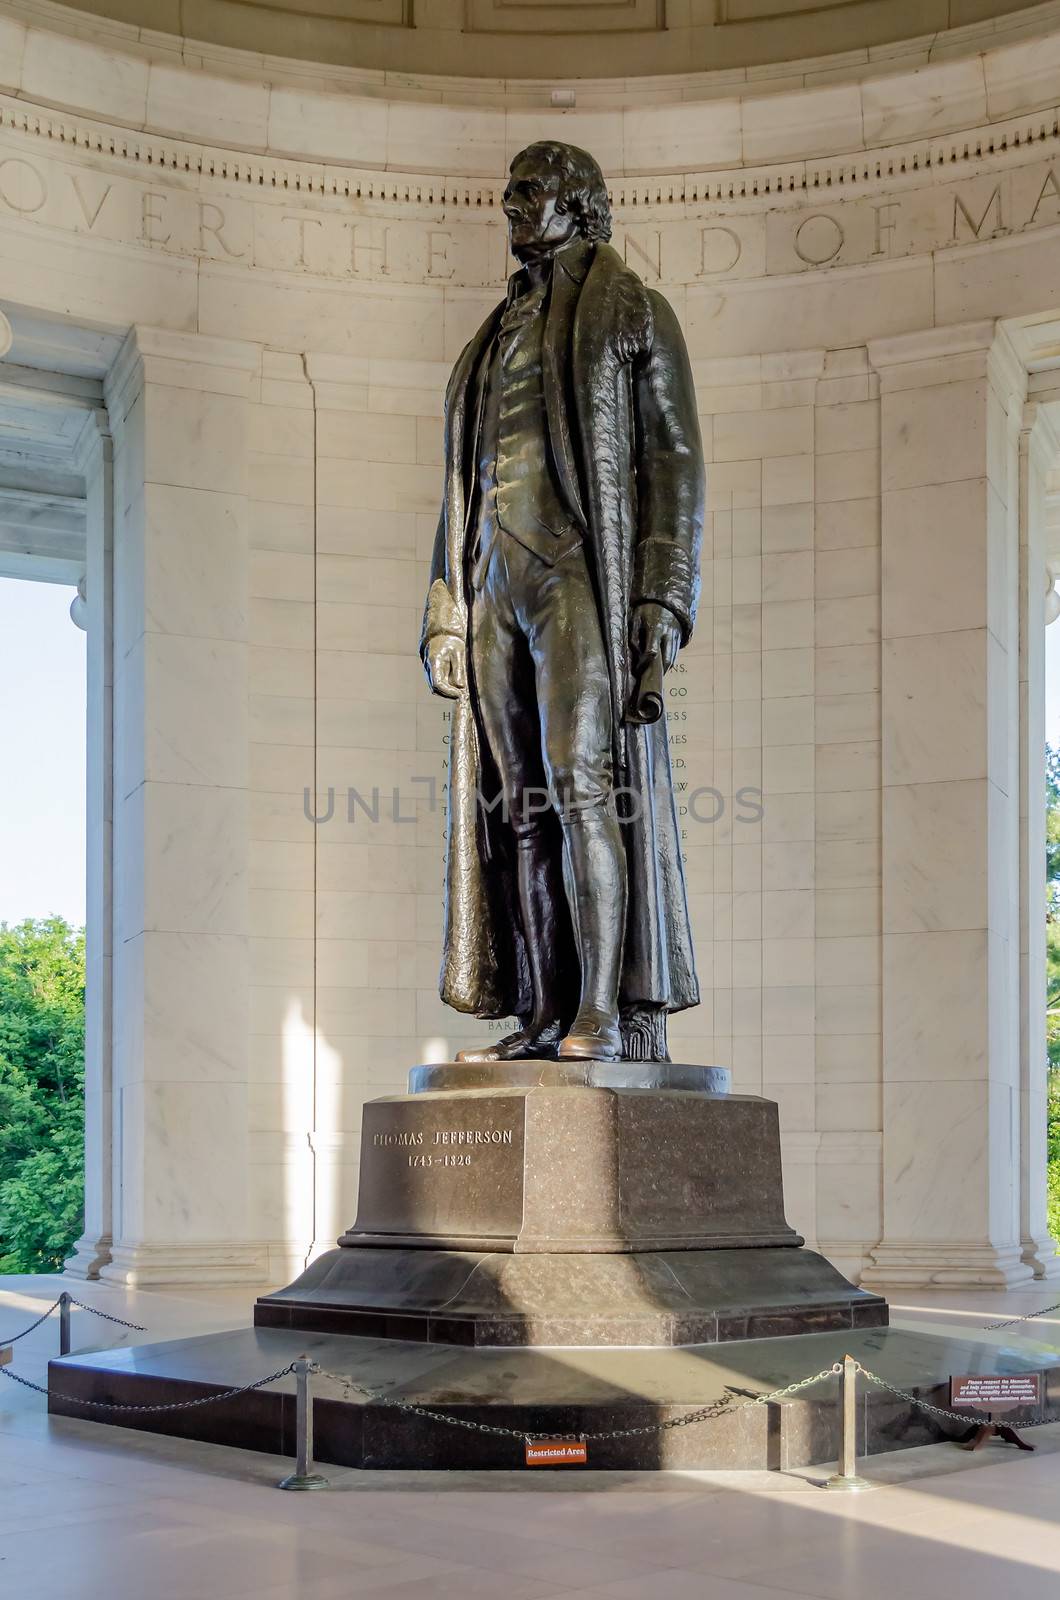 Thomas Jefferson Memorial in Washington DC by marcorubino